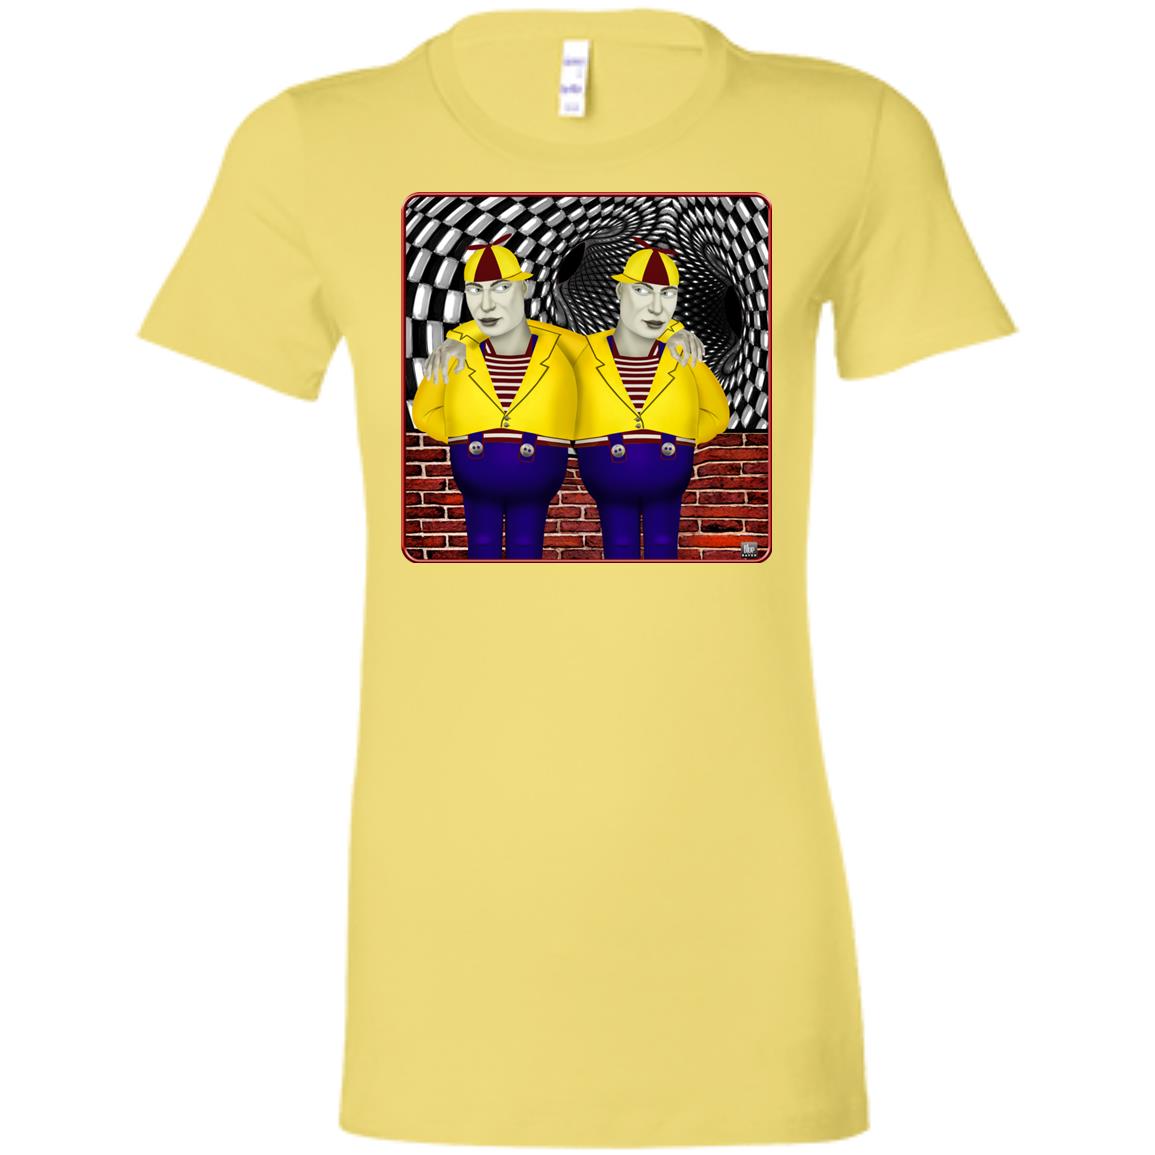 tweedledee and dum - Women's Fitted T-Shirt